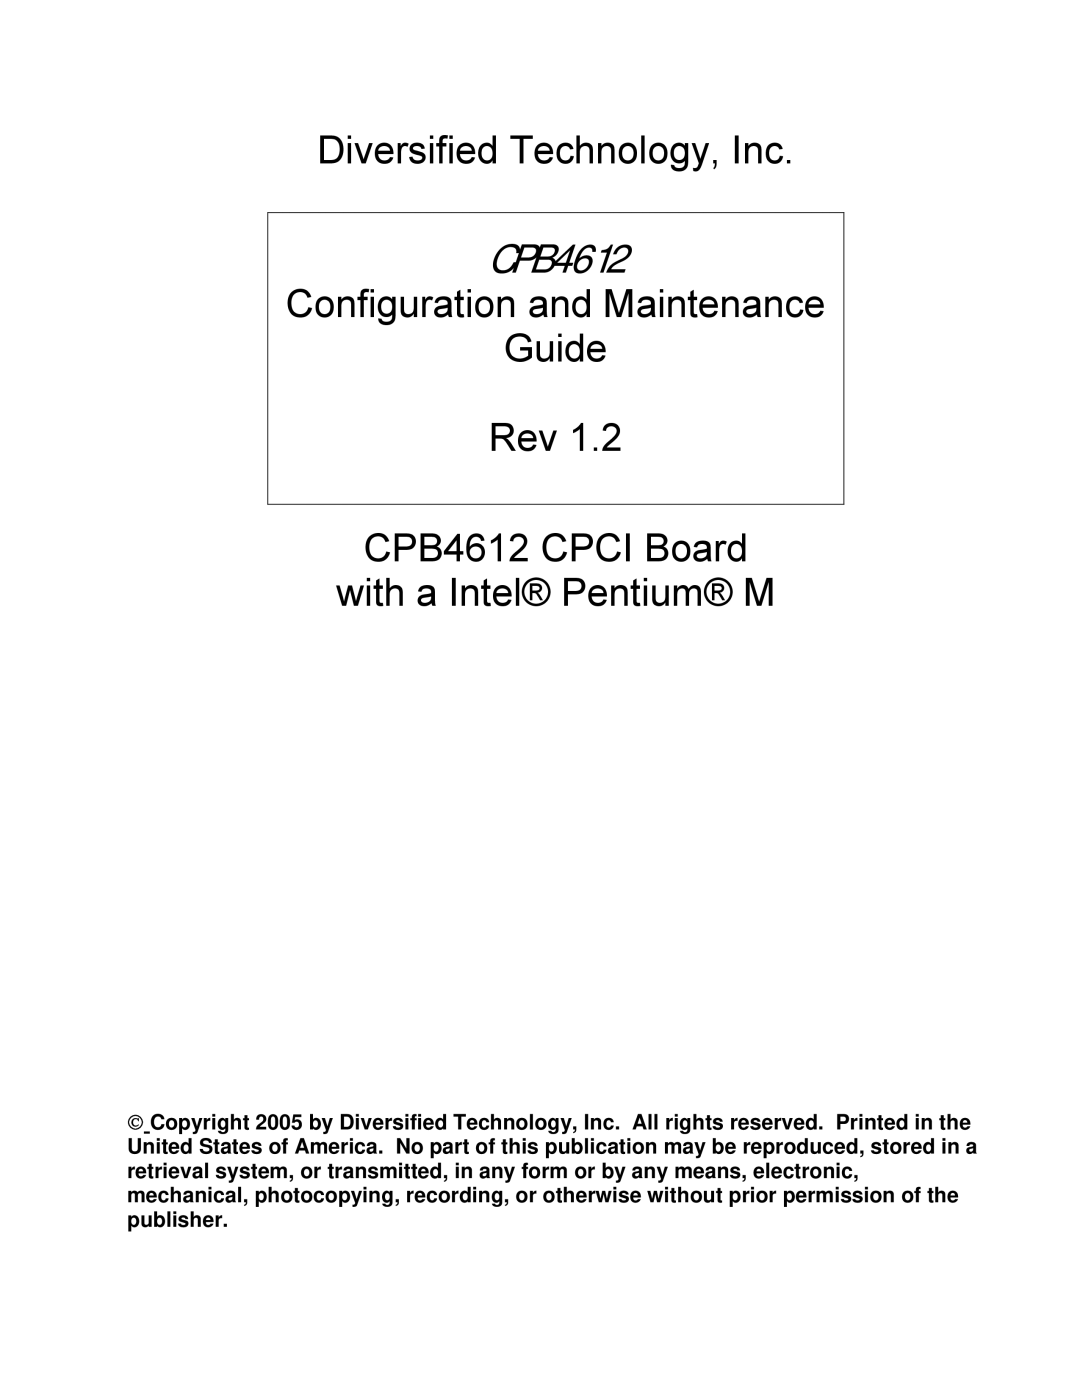 Intel cpci borard with a intel pentuim M, cpb4612 manual CPB4612 